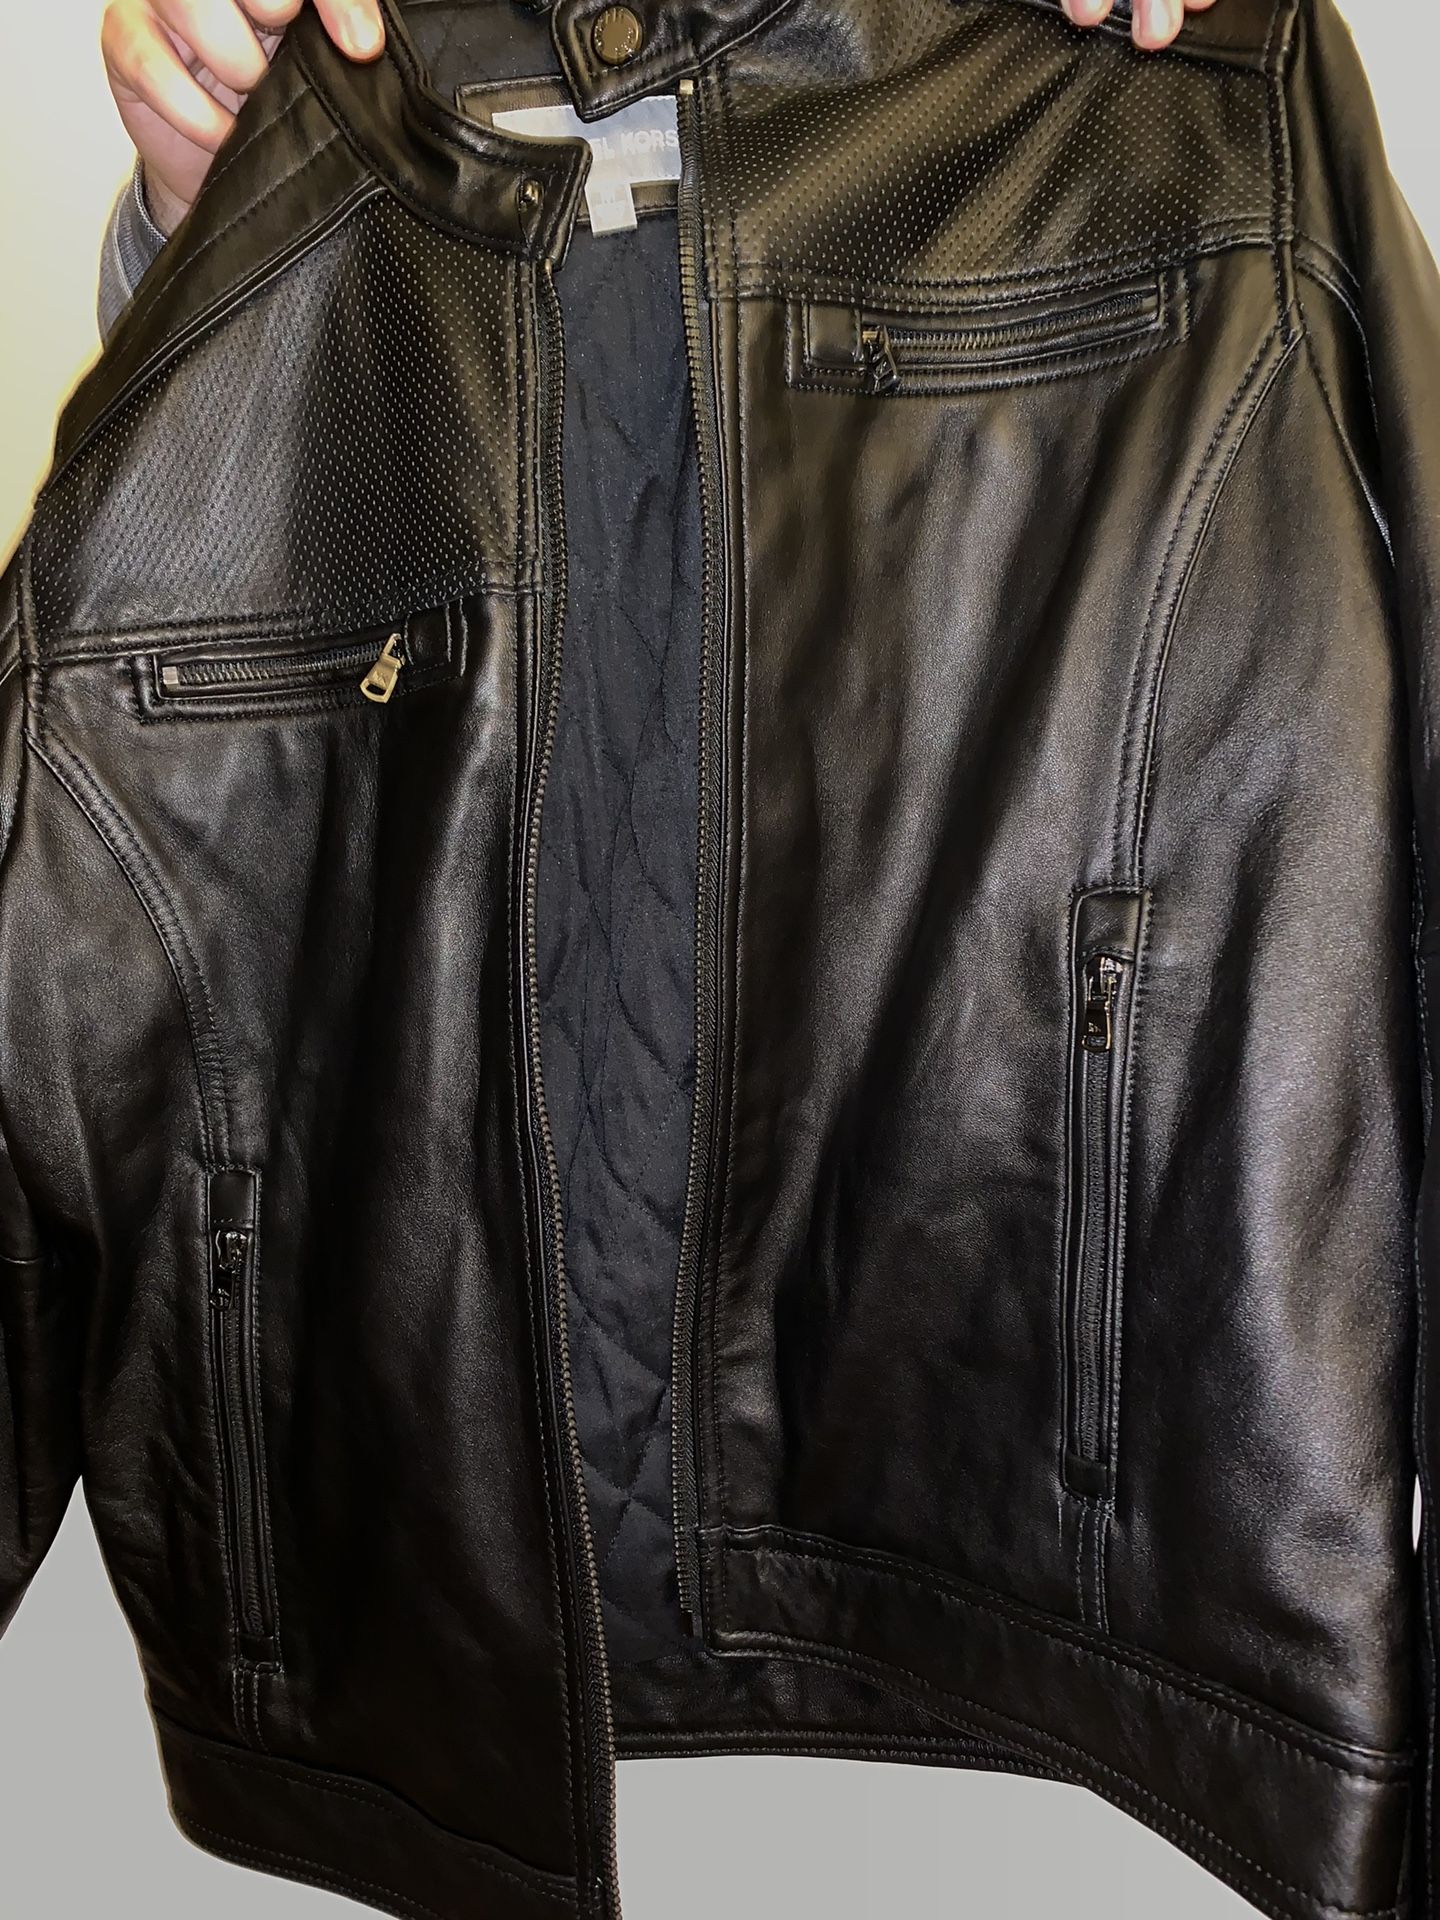 Michael Kors Leather Jacket !!